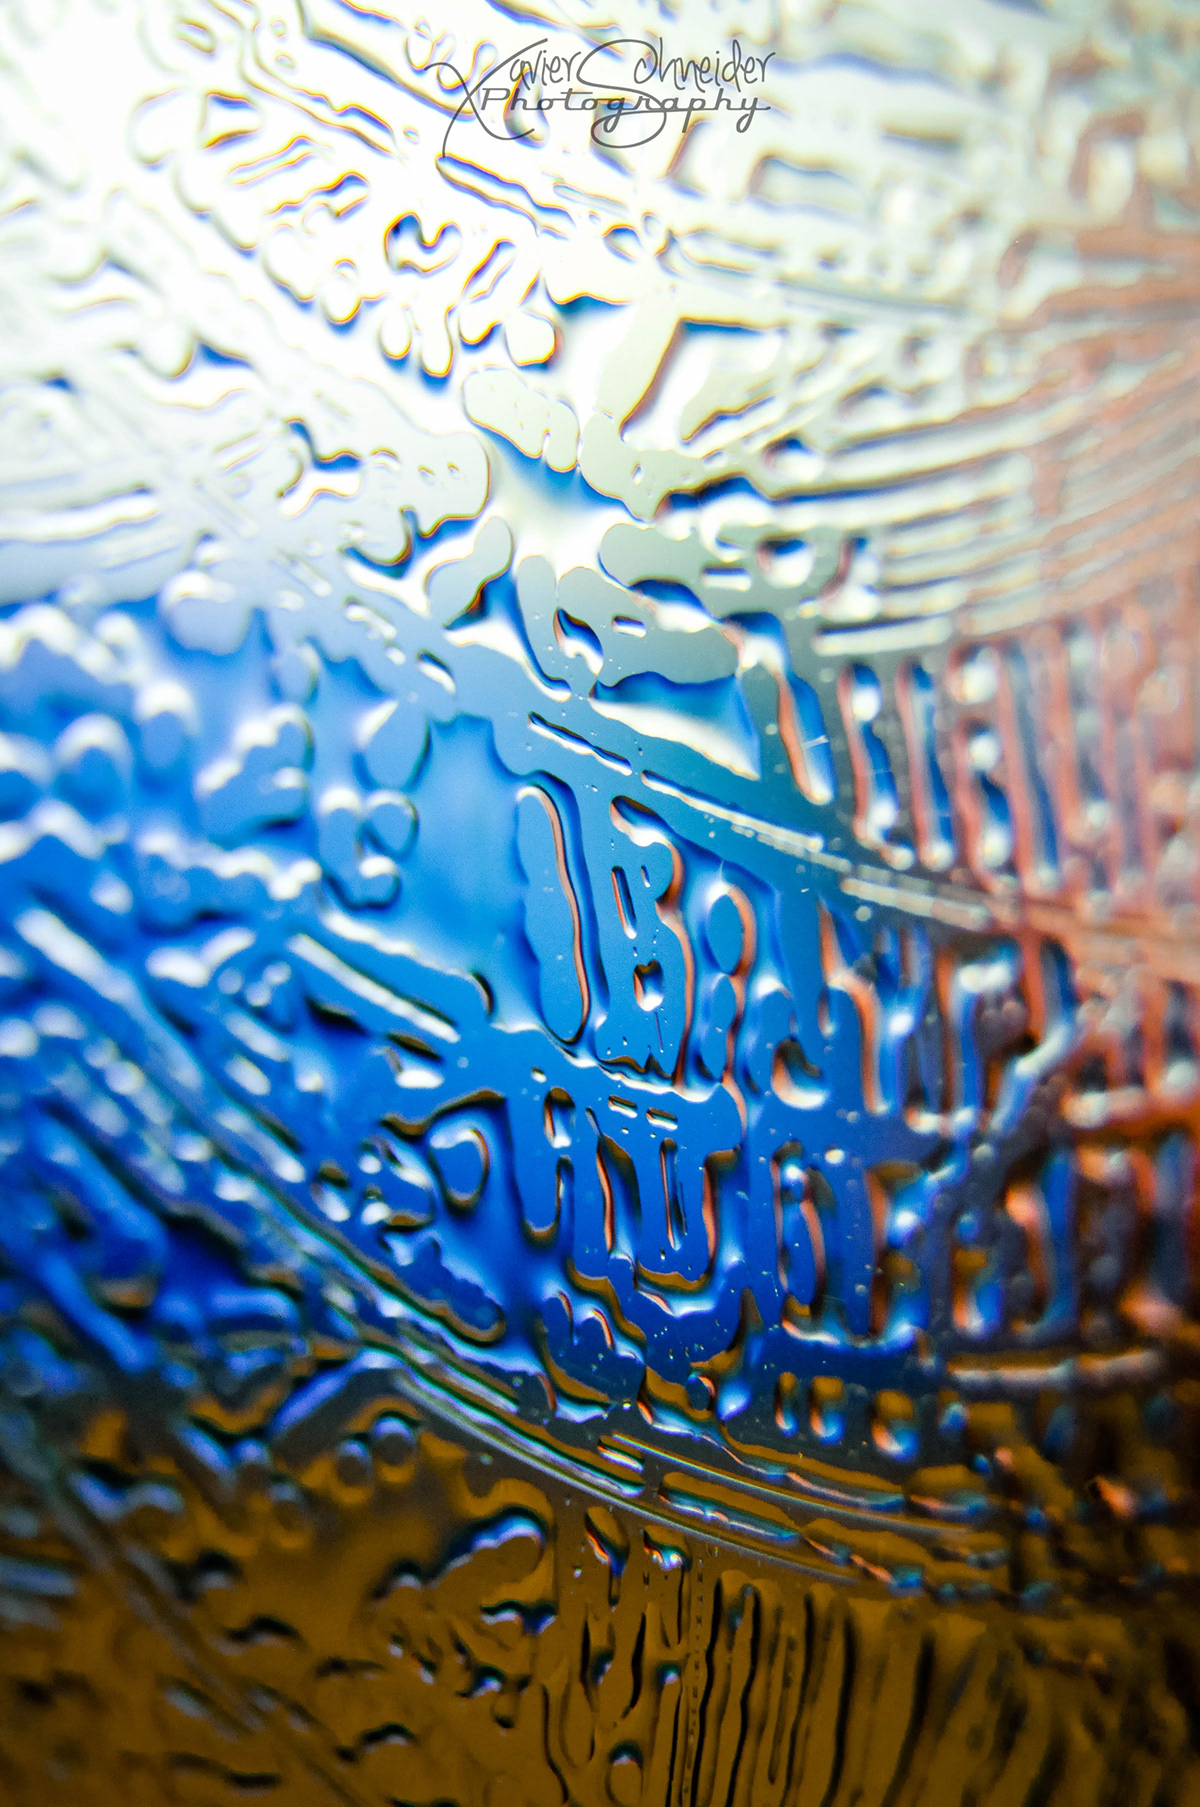 photos oil glass colors abstract metal Liquid xavier schneider art macro macrophotography Nikon nikkor